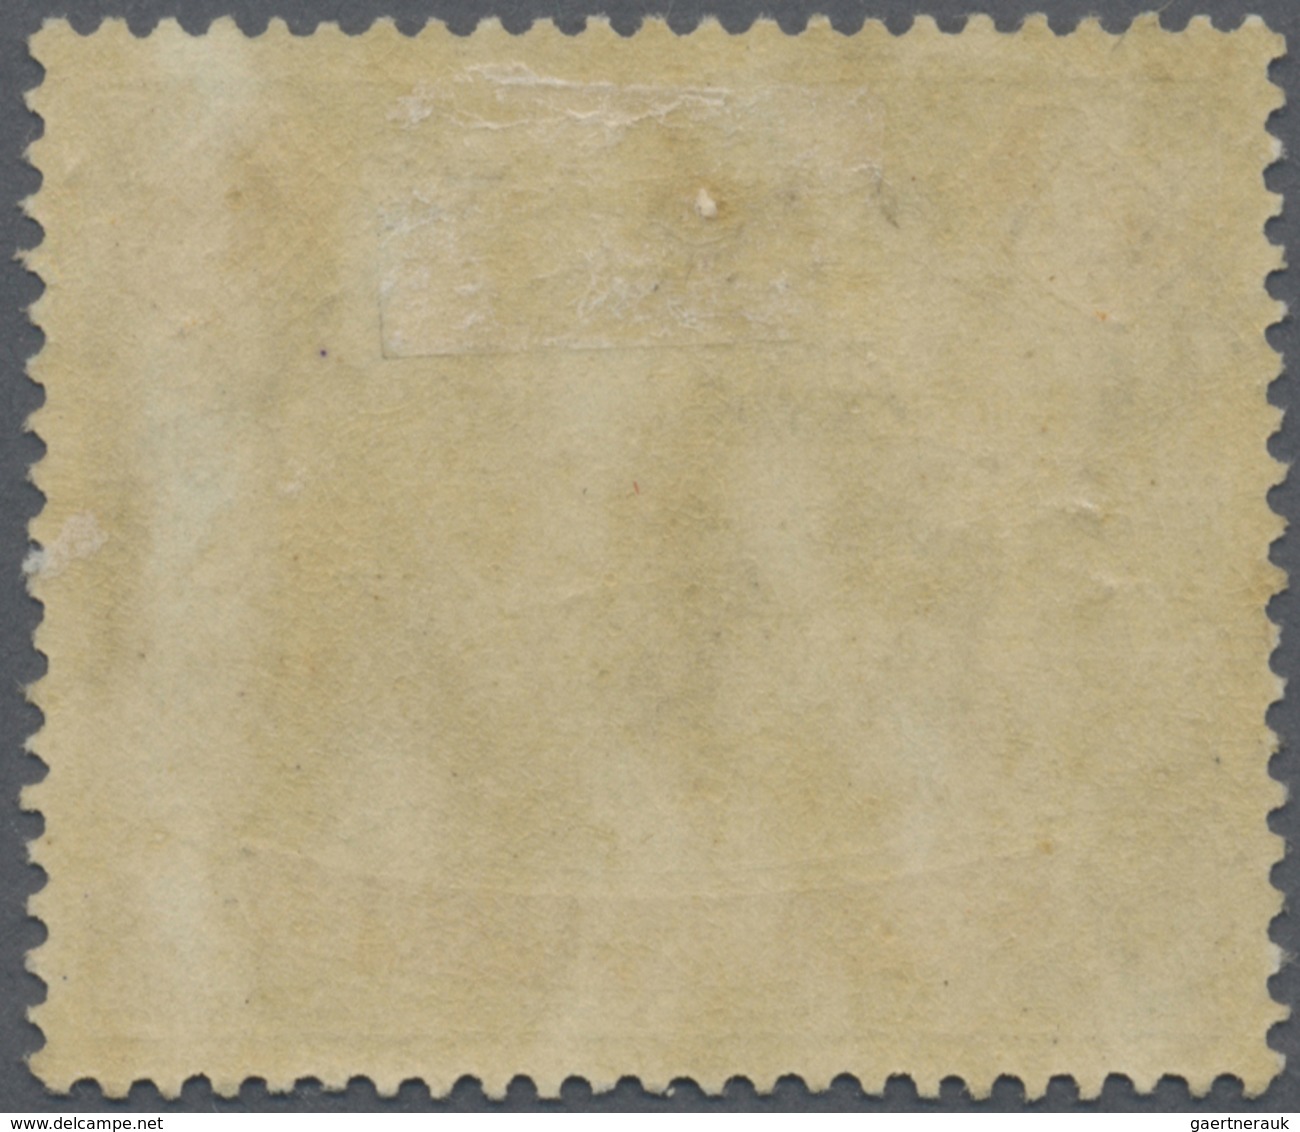 O Malaiischer Staatenbund: 1922-34 'Elephants' $25 Green & Orange, Wmk Mult Script CA, Used And Cancel - Federated Malay States